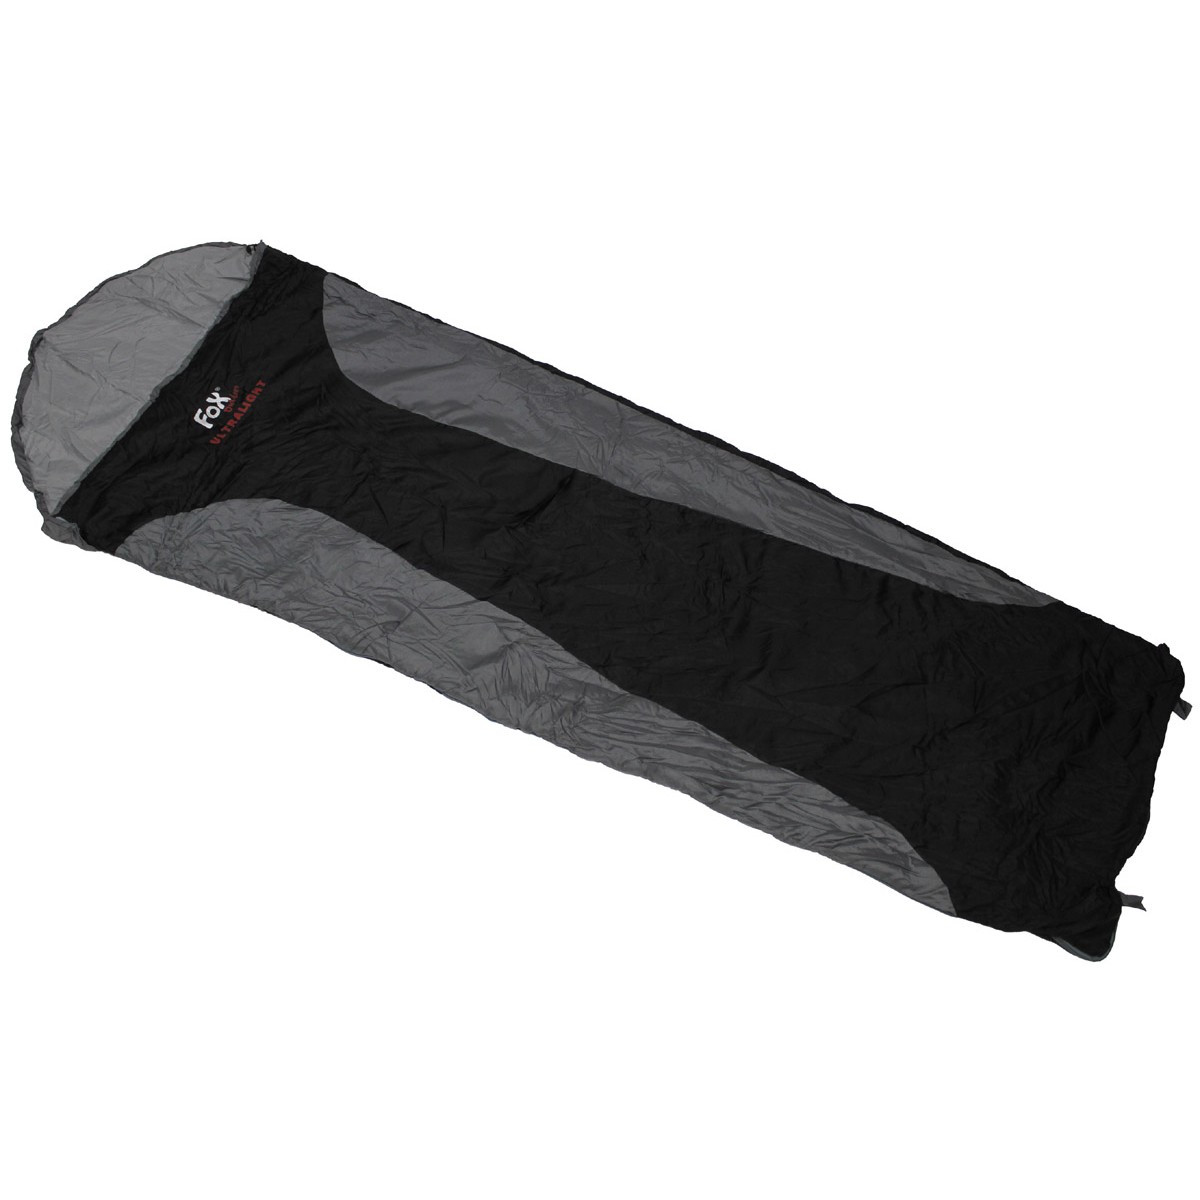 Schlafsack, "Ultralight", schwarz/grau